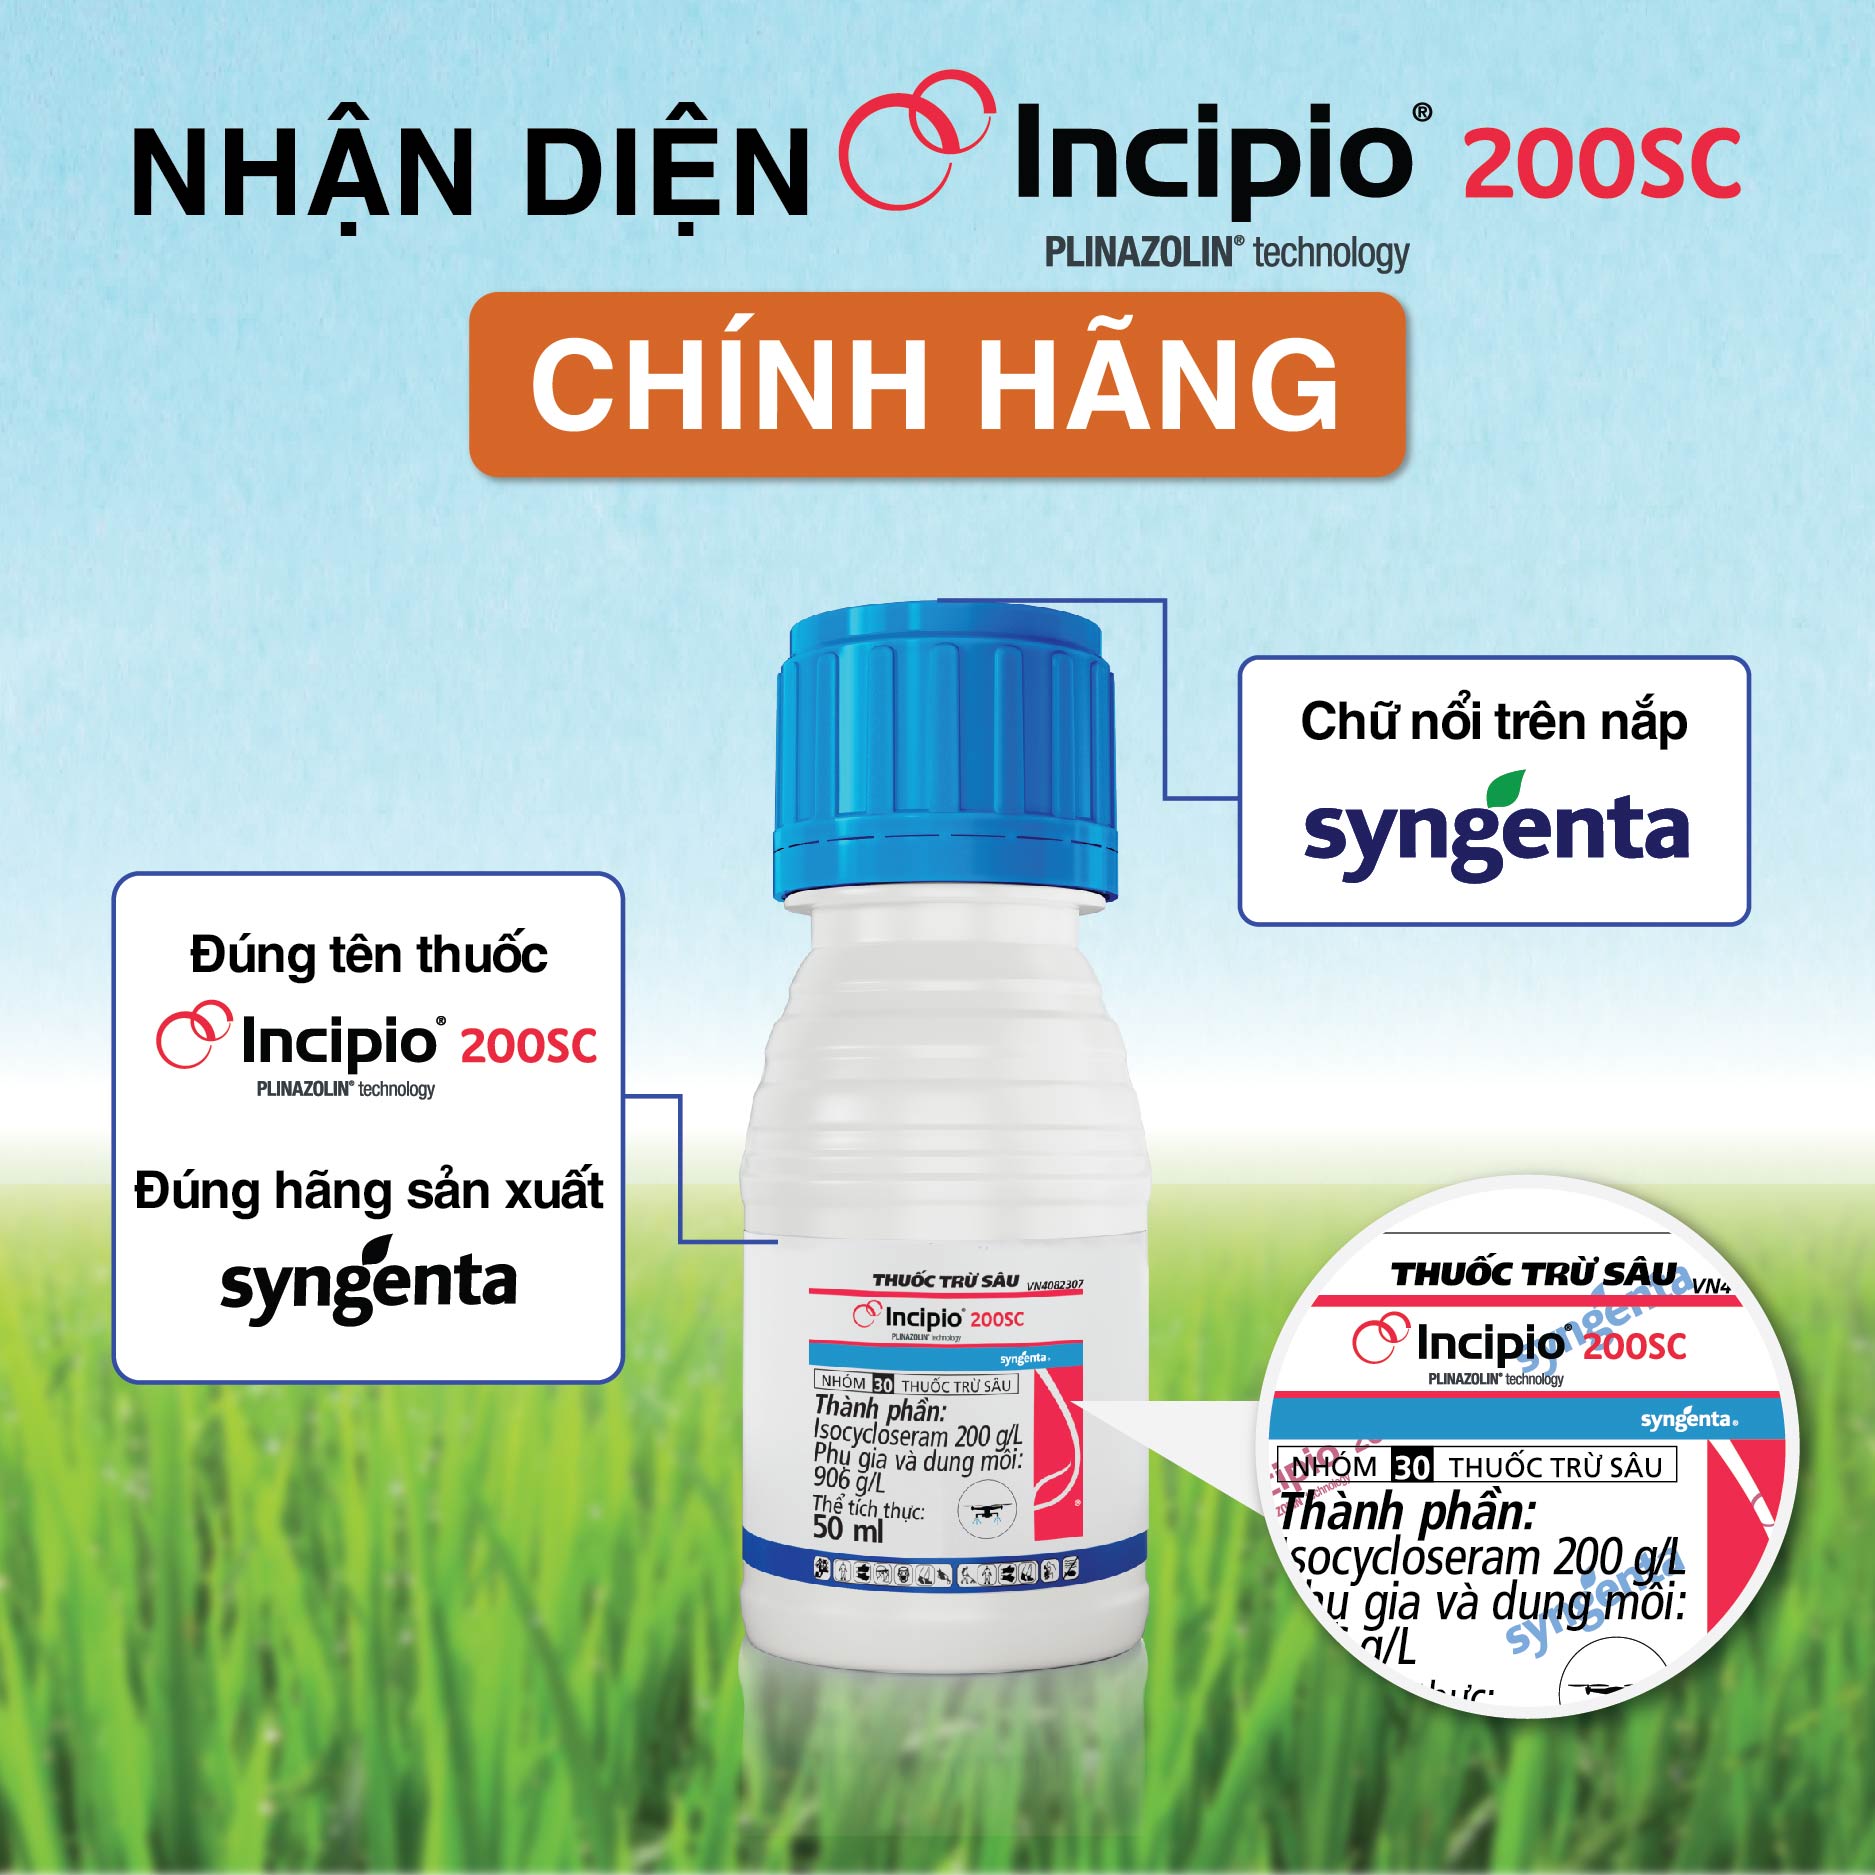 Nhan biet hang chinh hang Syngenta - Incipio